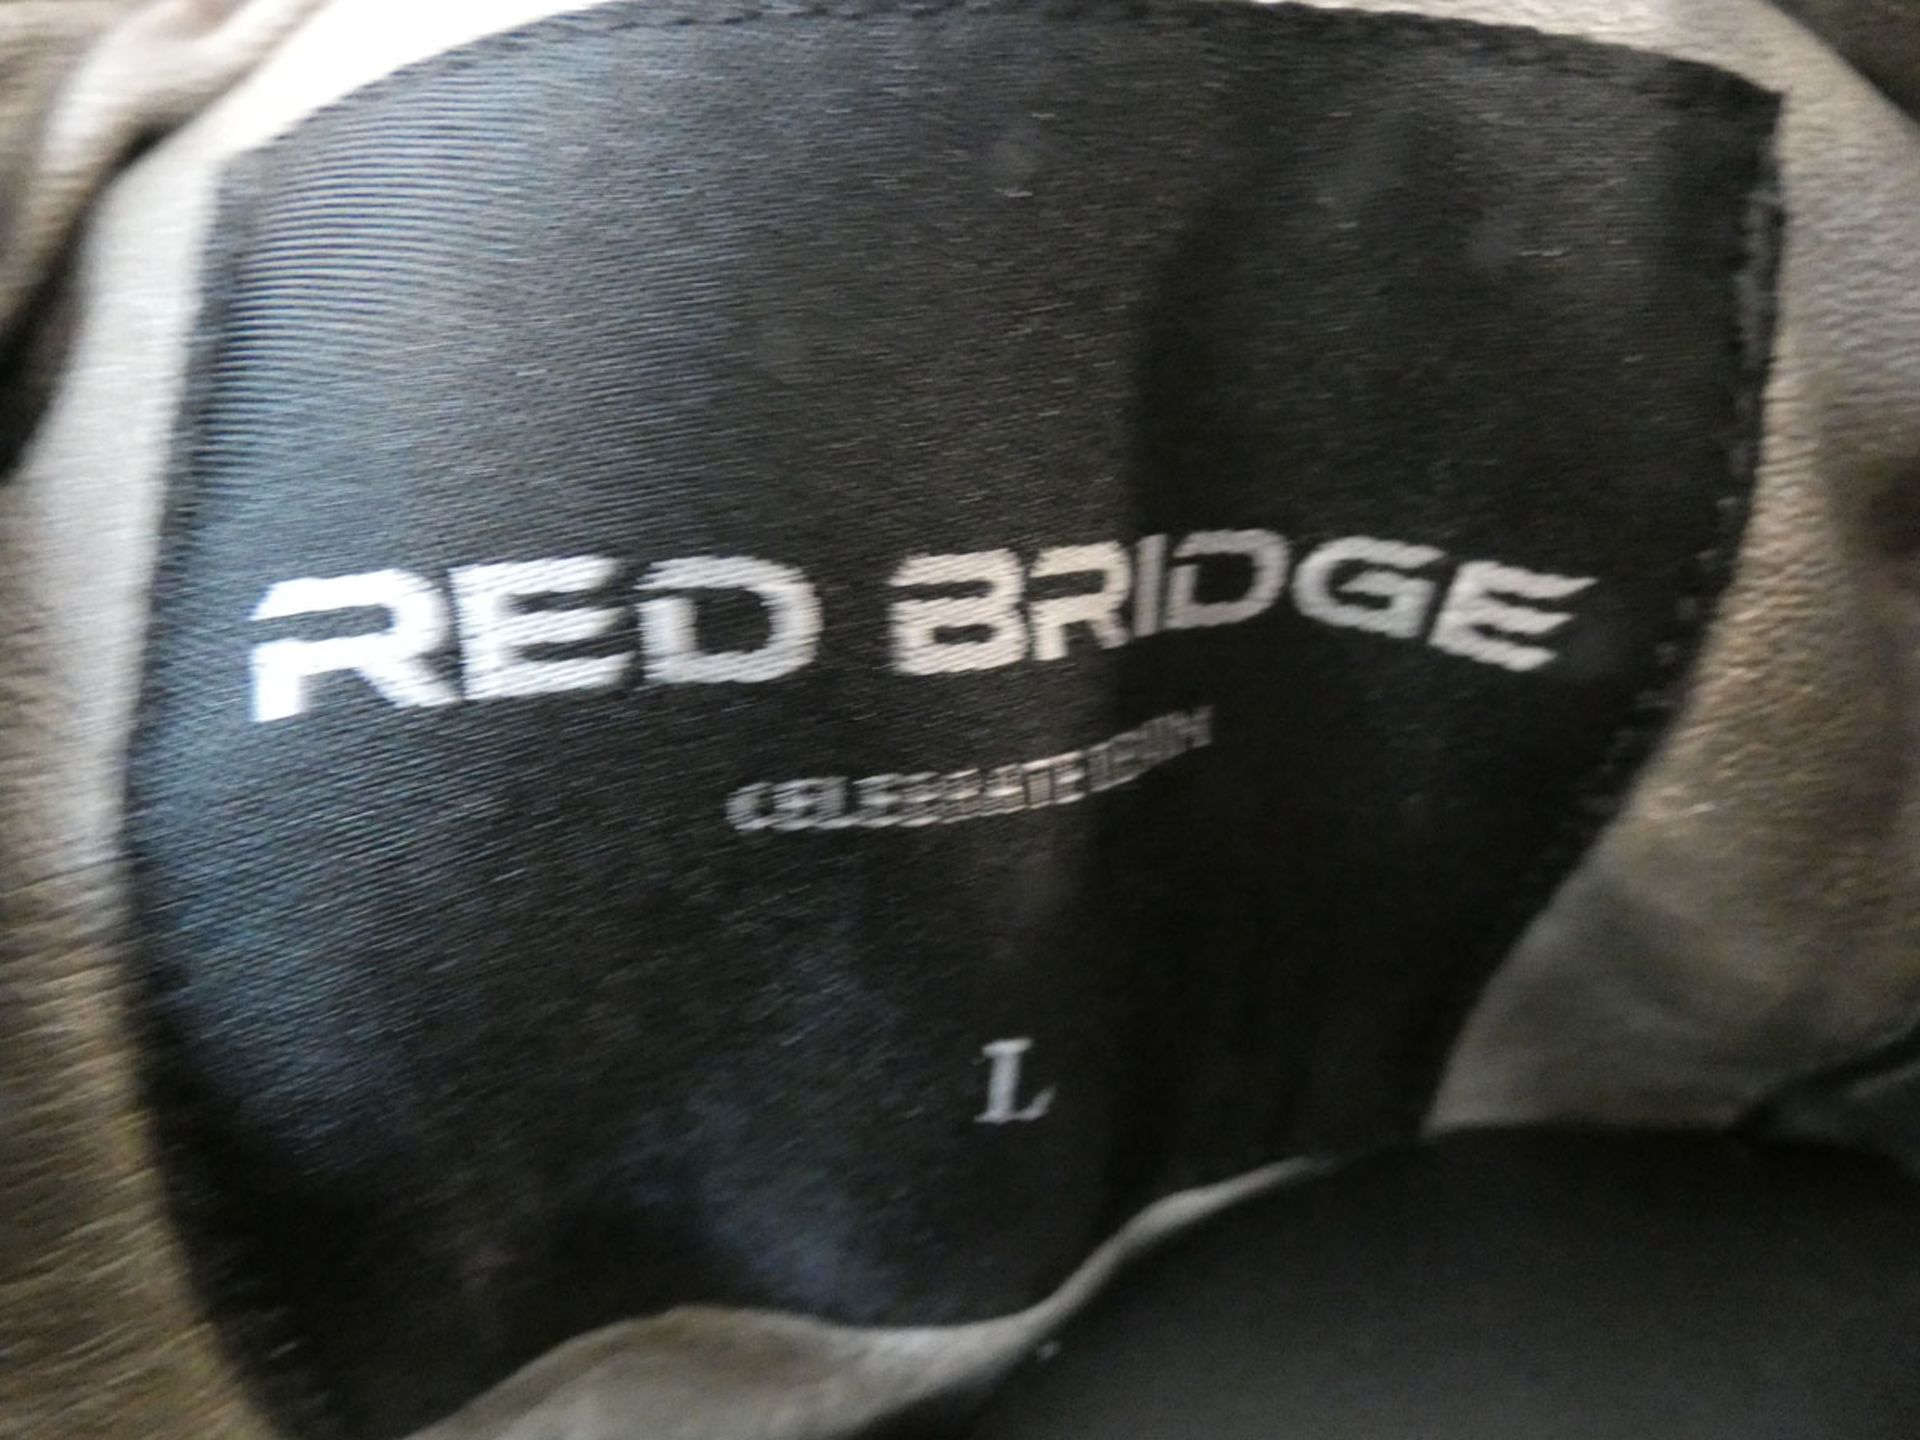 Red Bridge jacket in light grey size large - Image 2 of 2